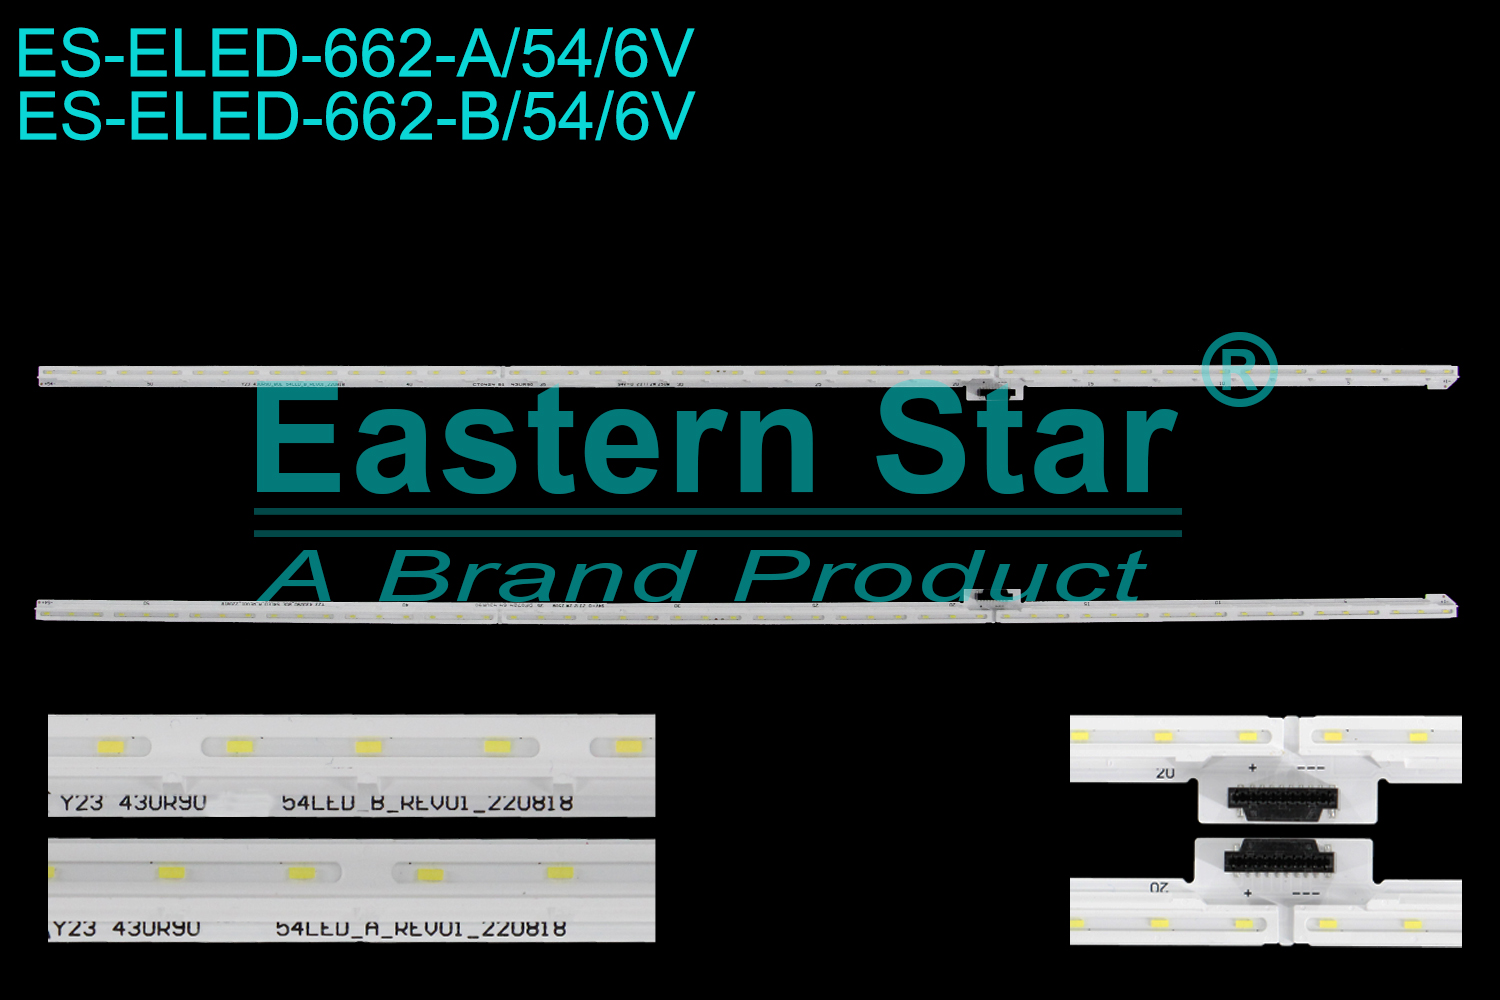 ES-ELED-662 ELED/EDGE TV backlight use for 43'' Lg  43UR9000PUA Y23 43UR90_ 54LED_A_REV01_220818  Y23 43UR90_ 54LED_B_REV01_220818 LED STRIPS(2)